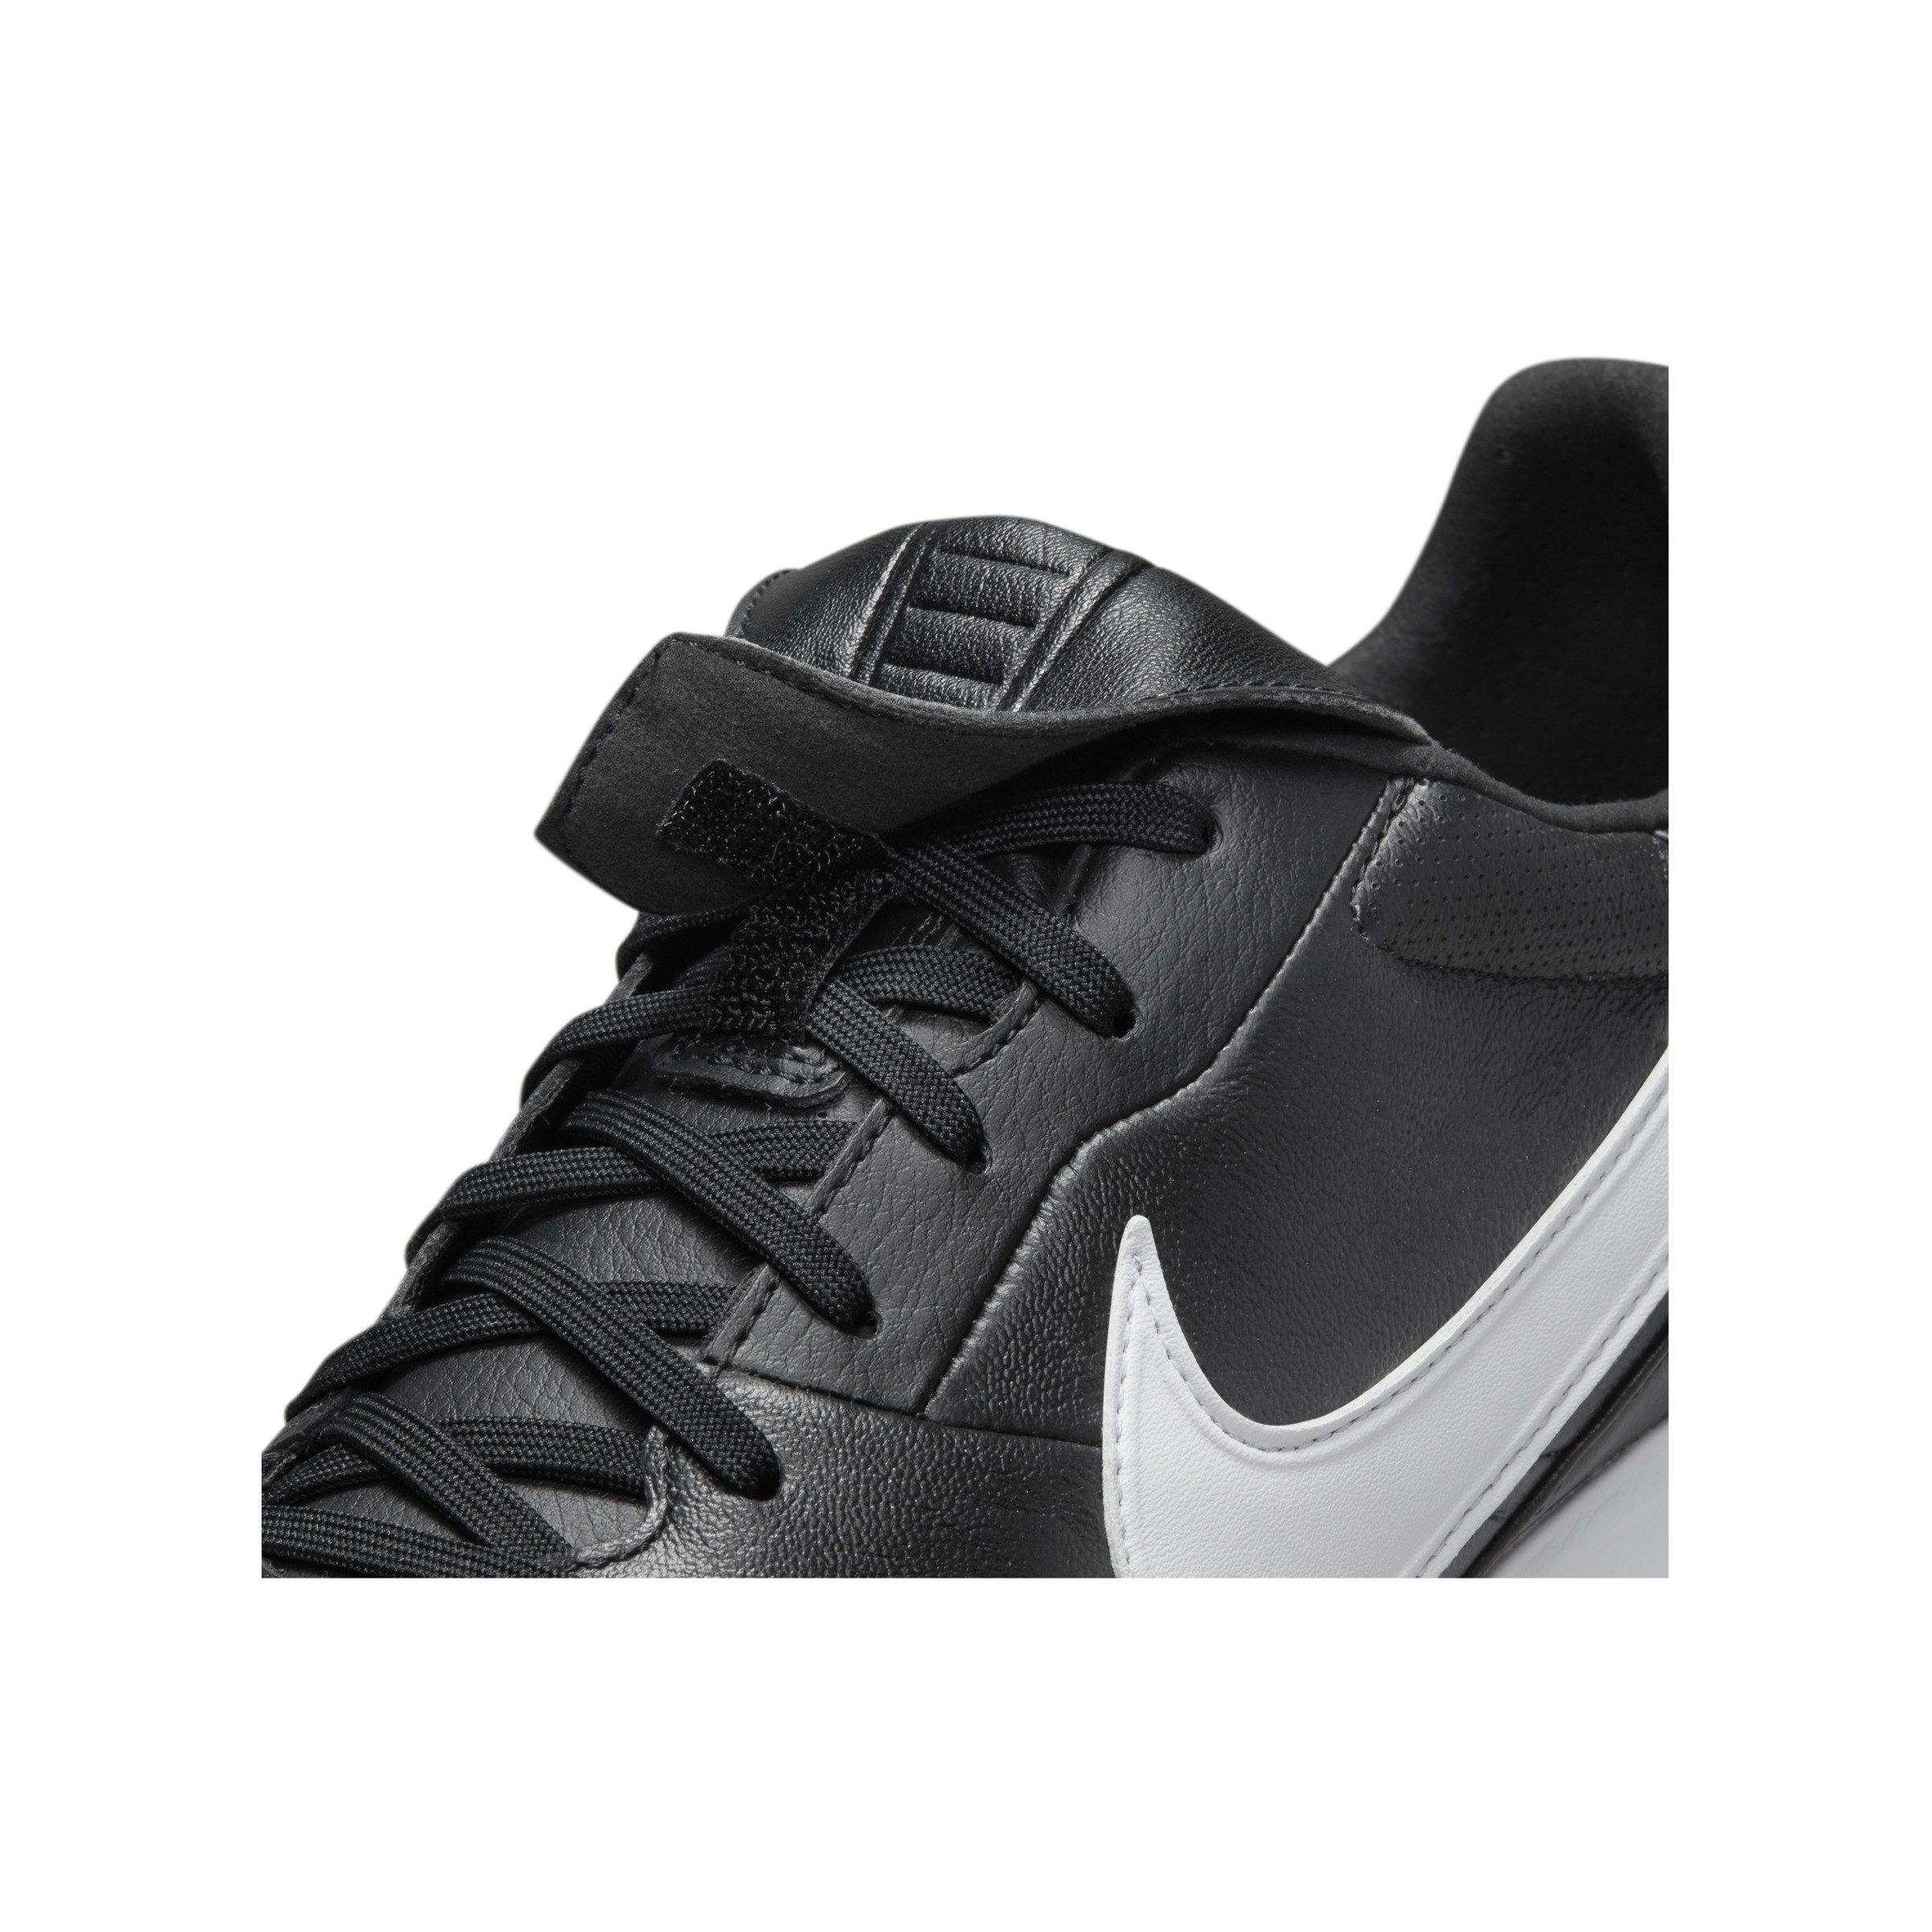 Nike Premier III IC Halle Schwarz Weiss F010 schwarz